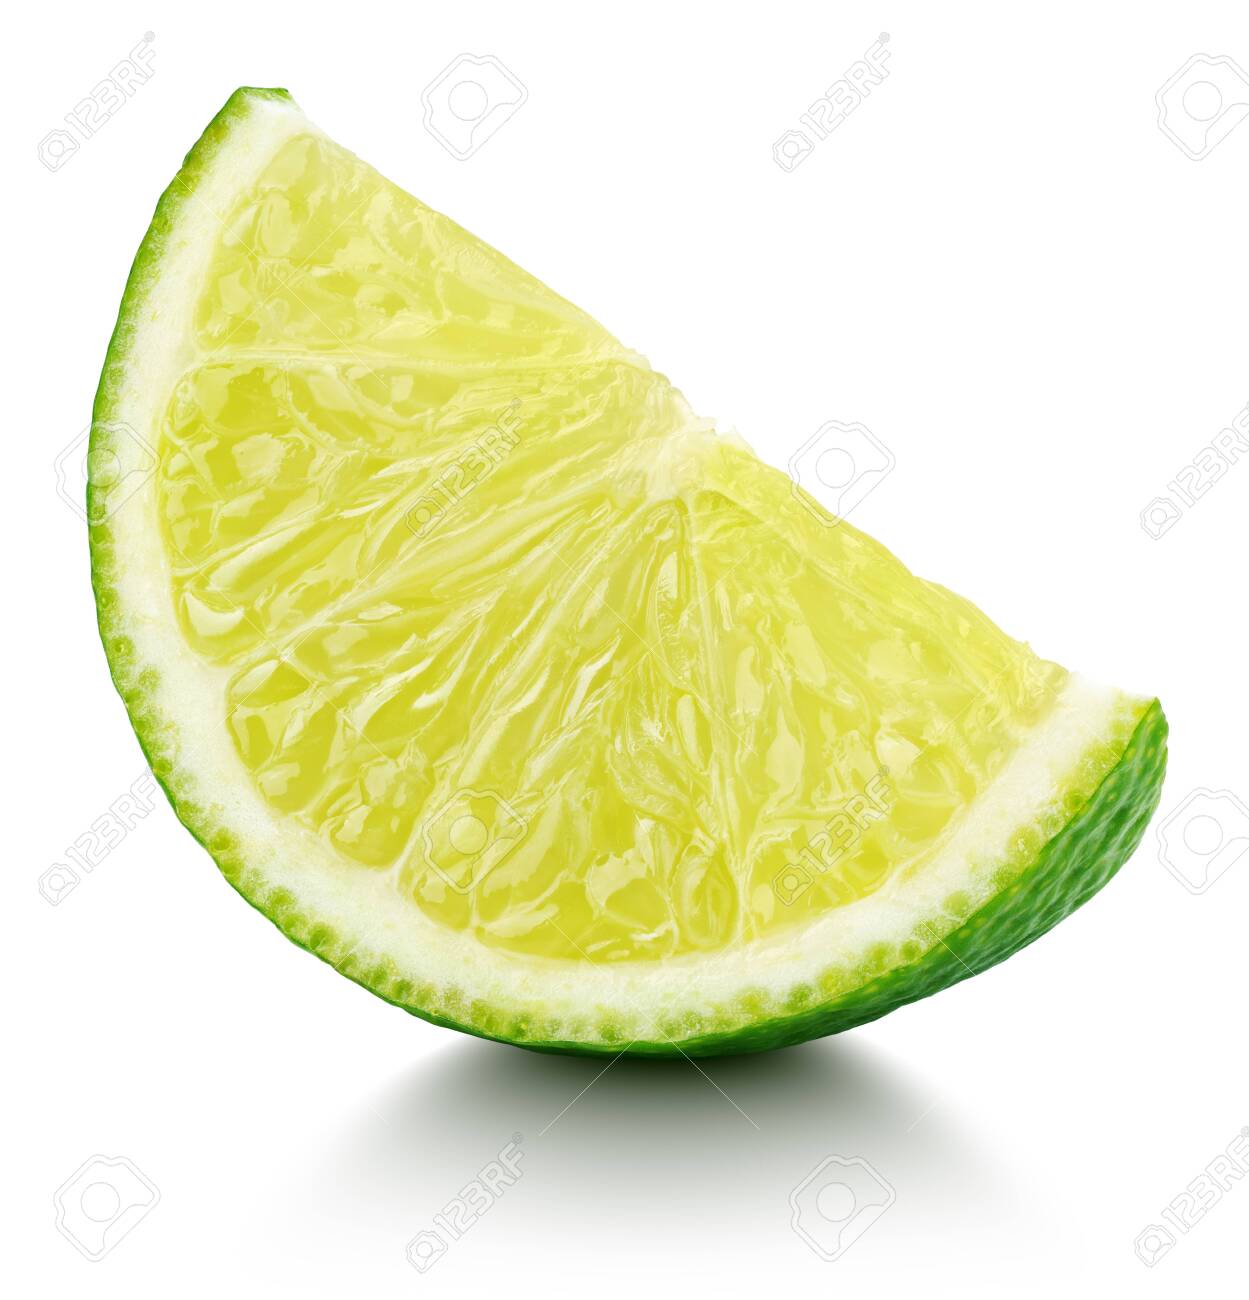 137934179-ripe-slice-of-lime-citrus-fruit-isolated-on-white-background-lime-wedge.jpg